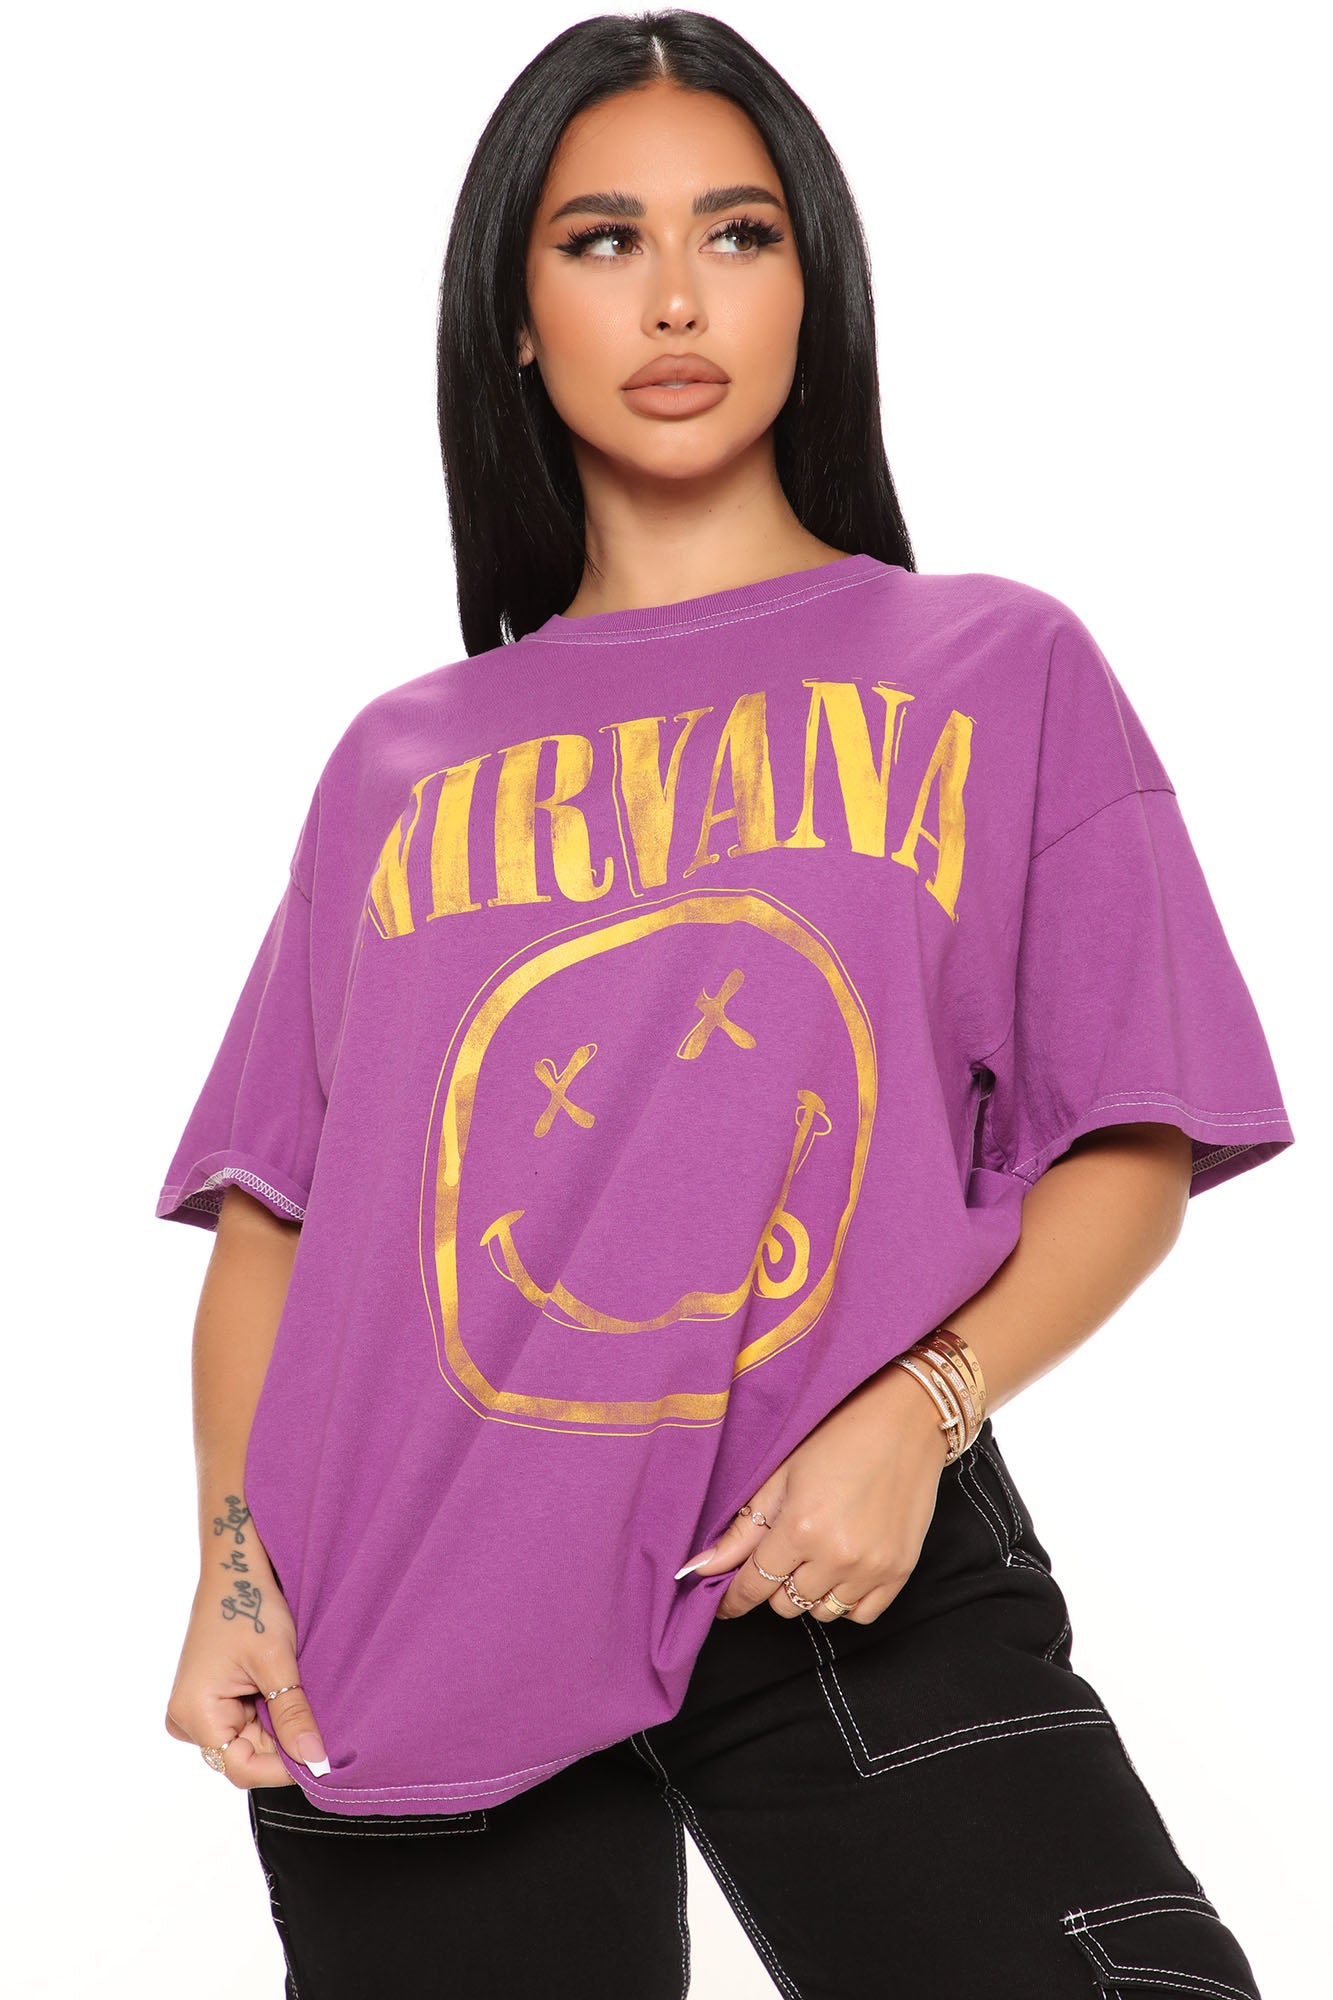 Mono B Clothing Purple Nirvana Ventilated Shirt